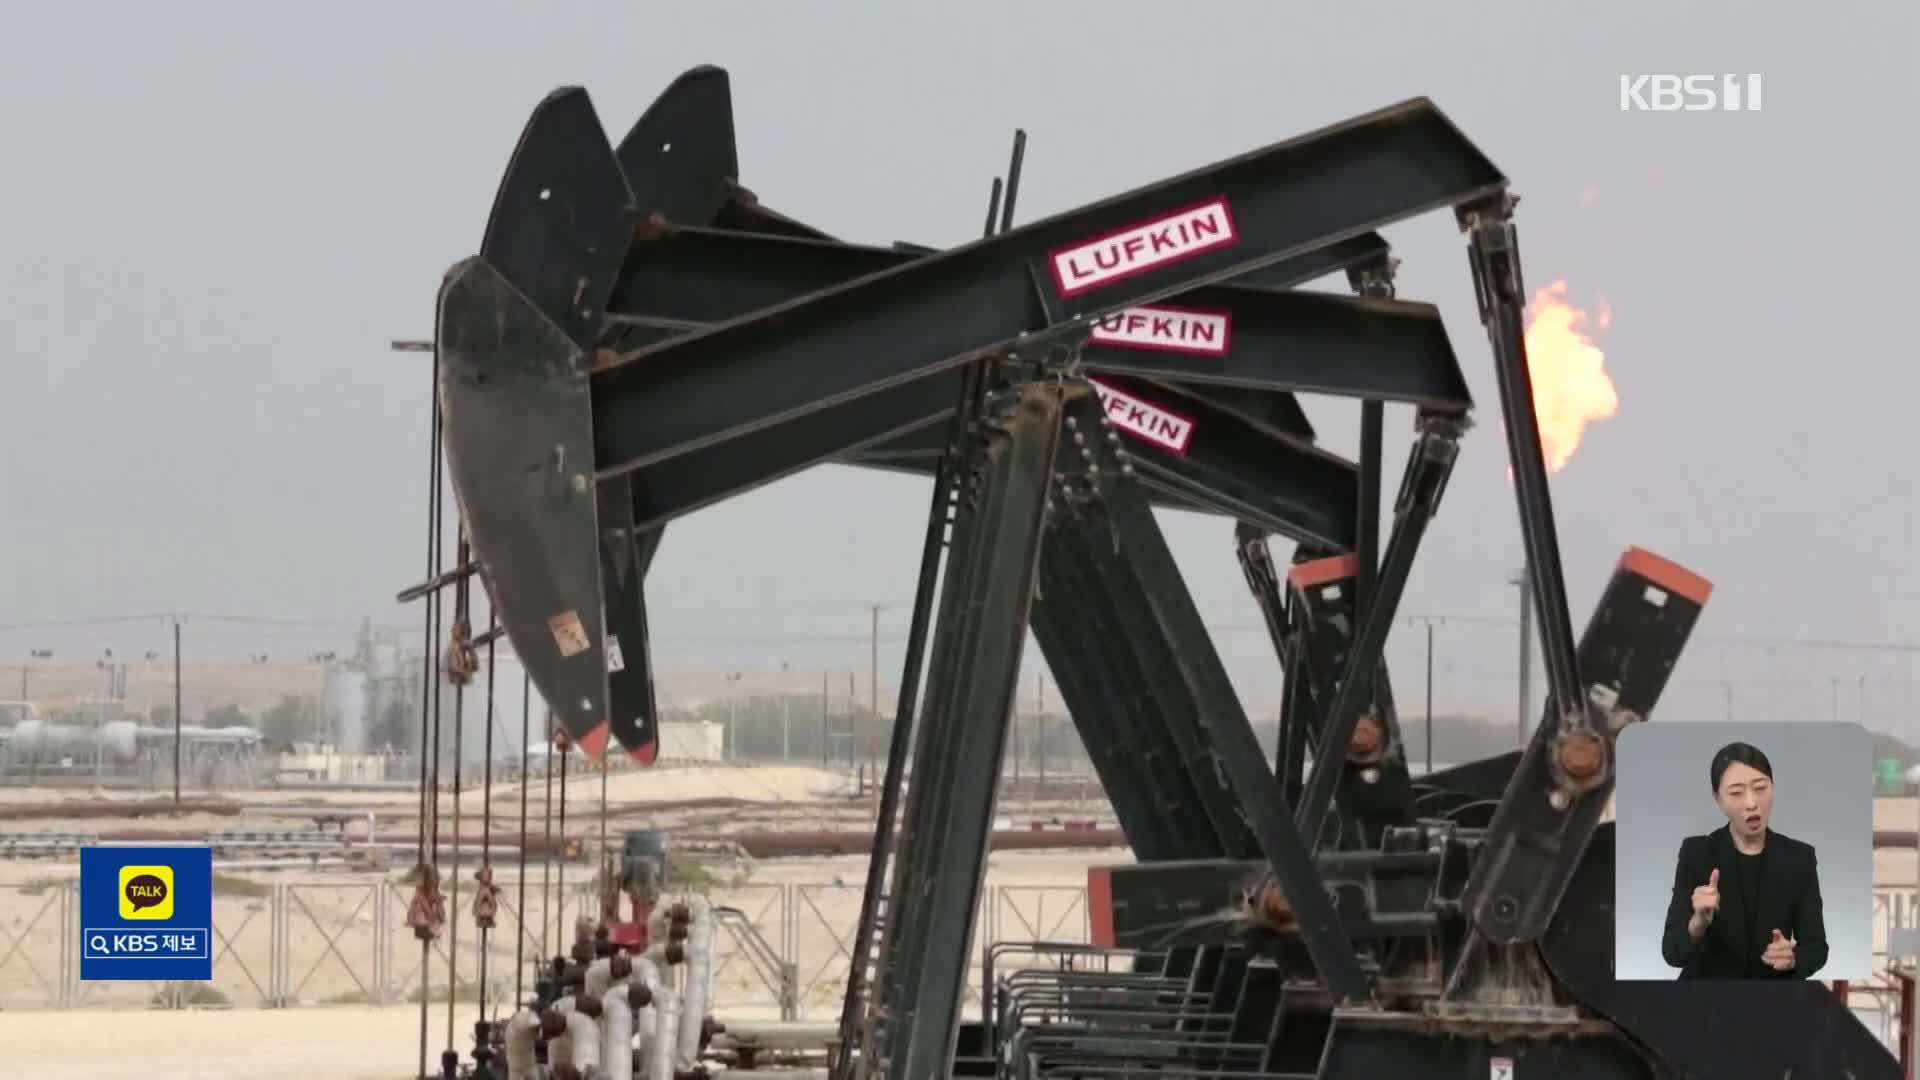 OPEC+ “하루 200만 배럴 감산”…코로나 이후 최대폭